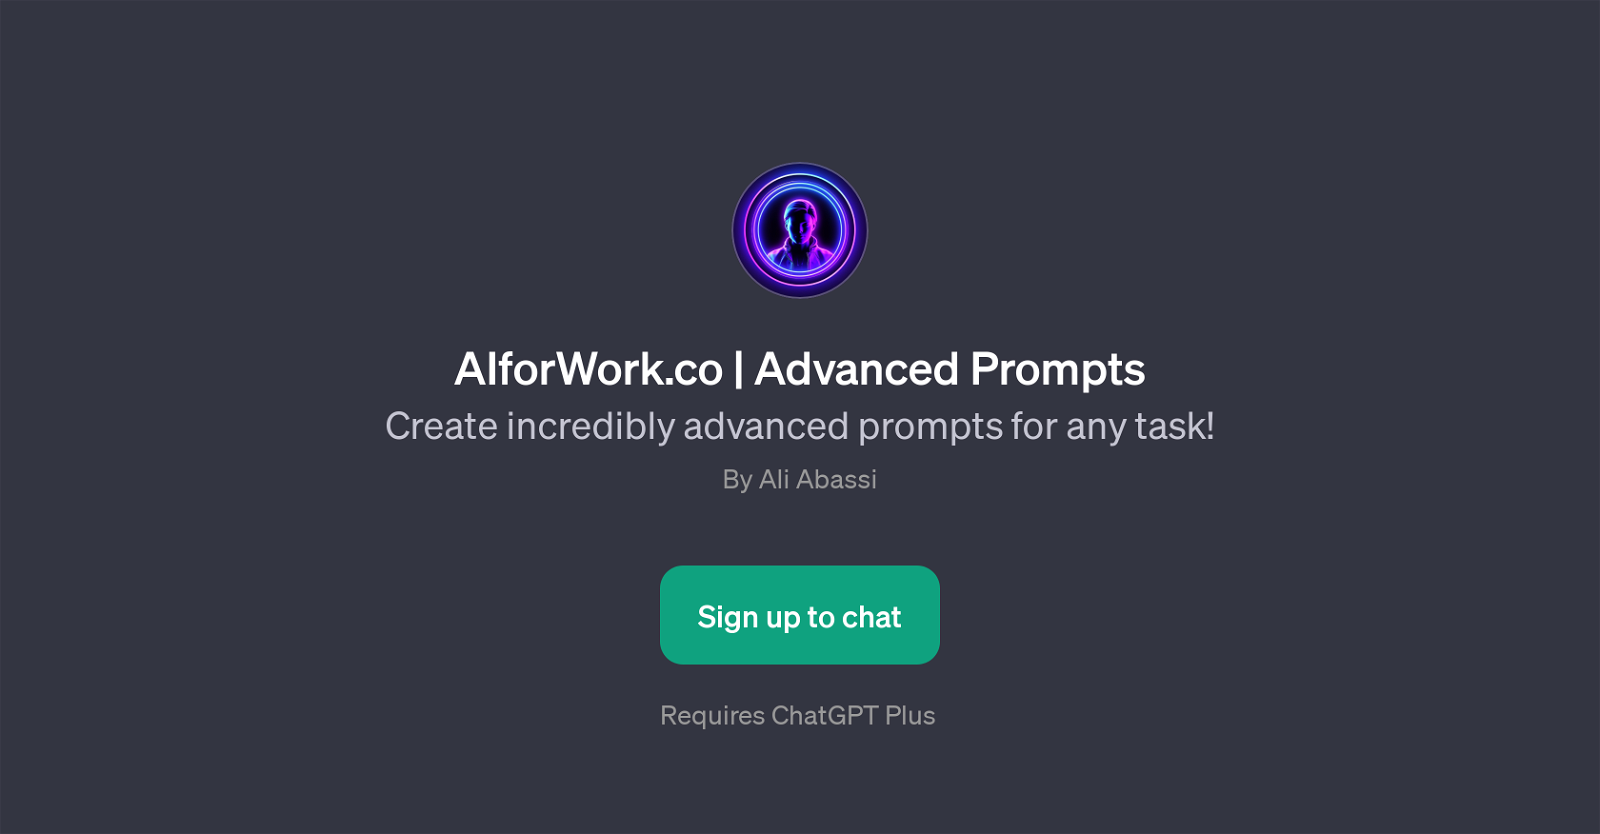 AIforWork.co | Advanced Prompts website